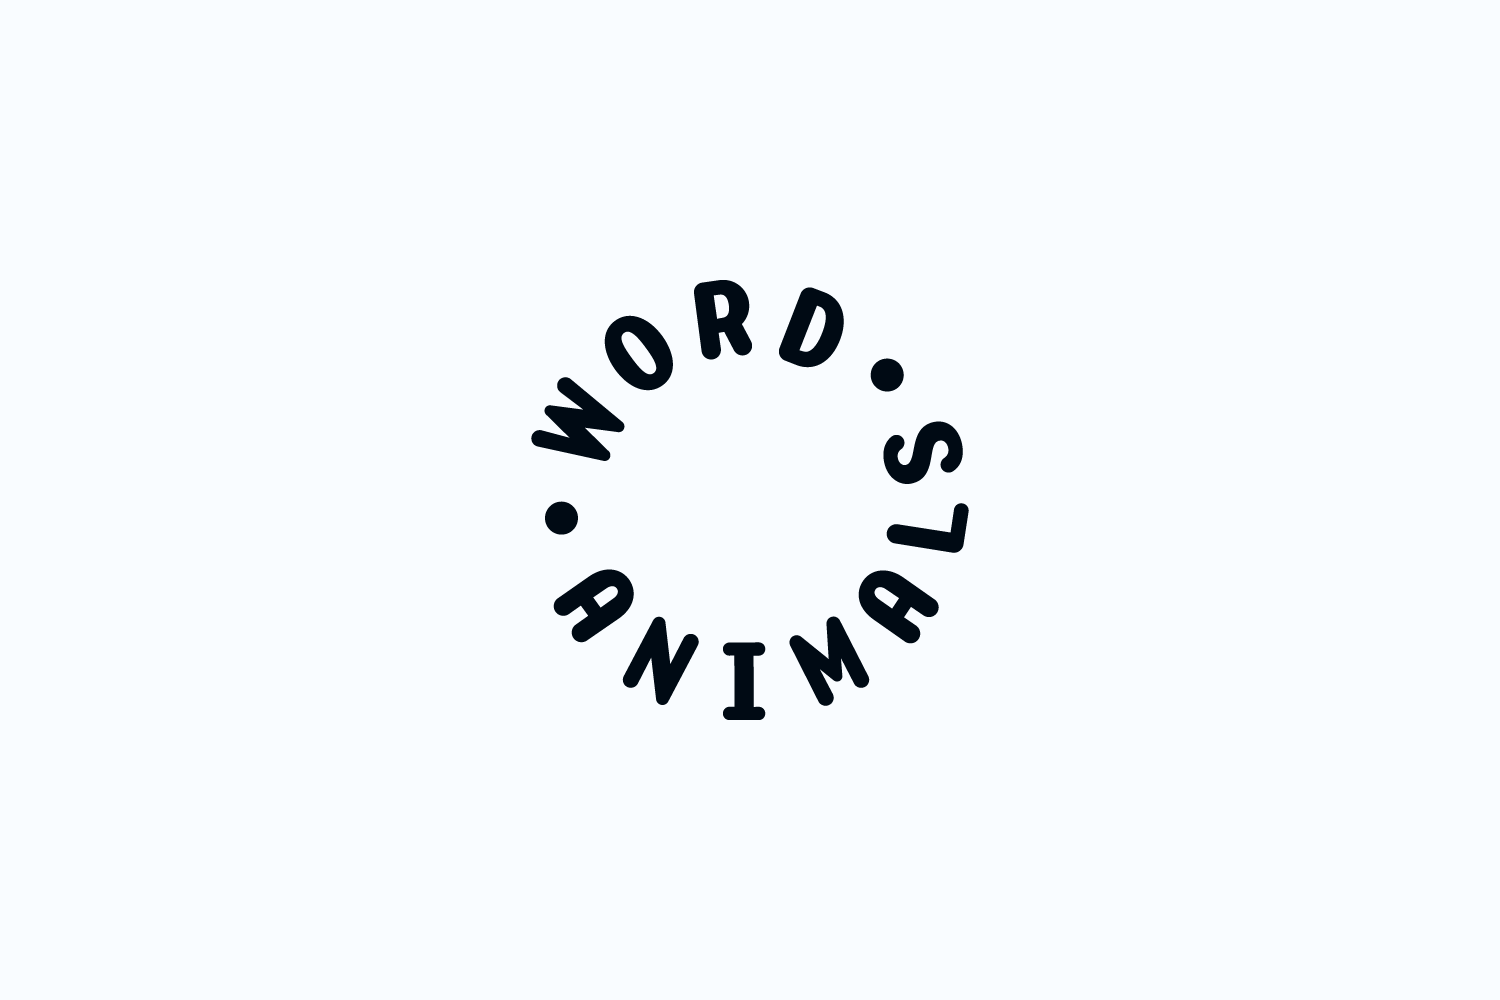 Word Animals badge